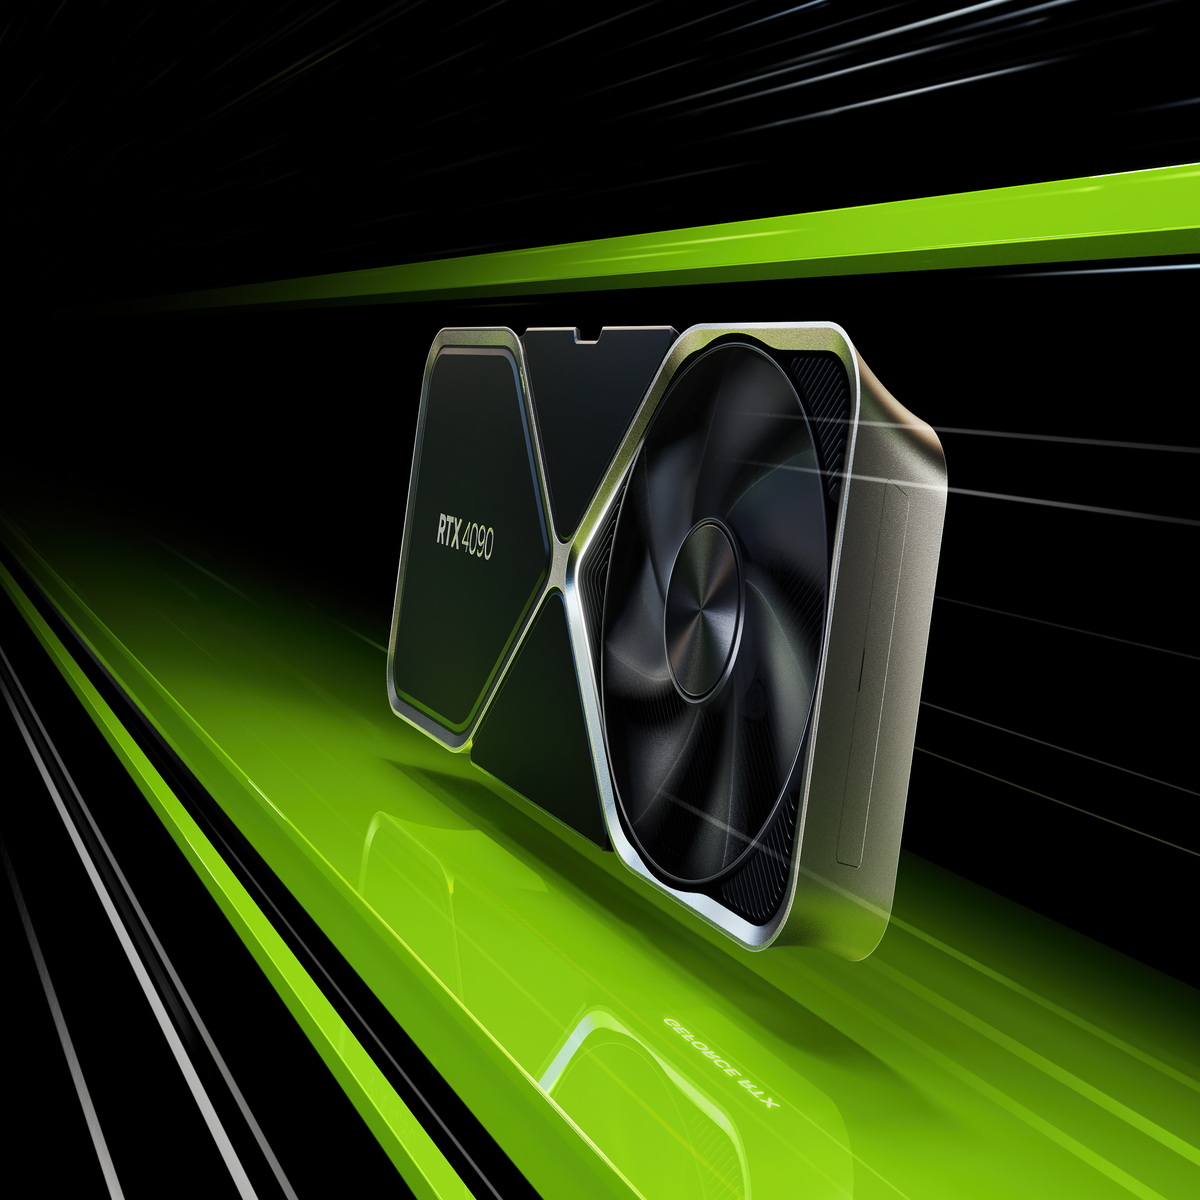 NVIDIA introduces 1440p esports displays, stunning new OLED, Mini